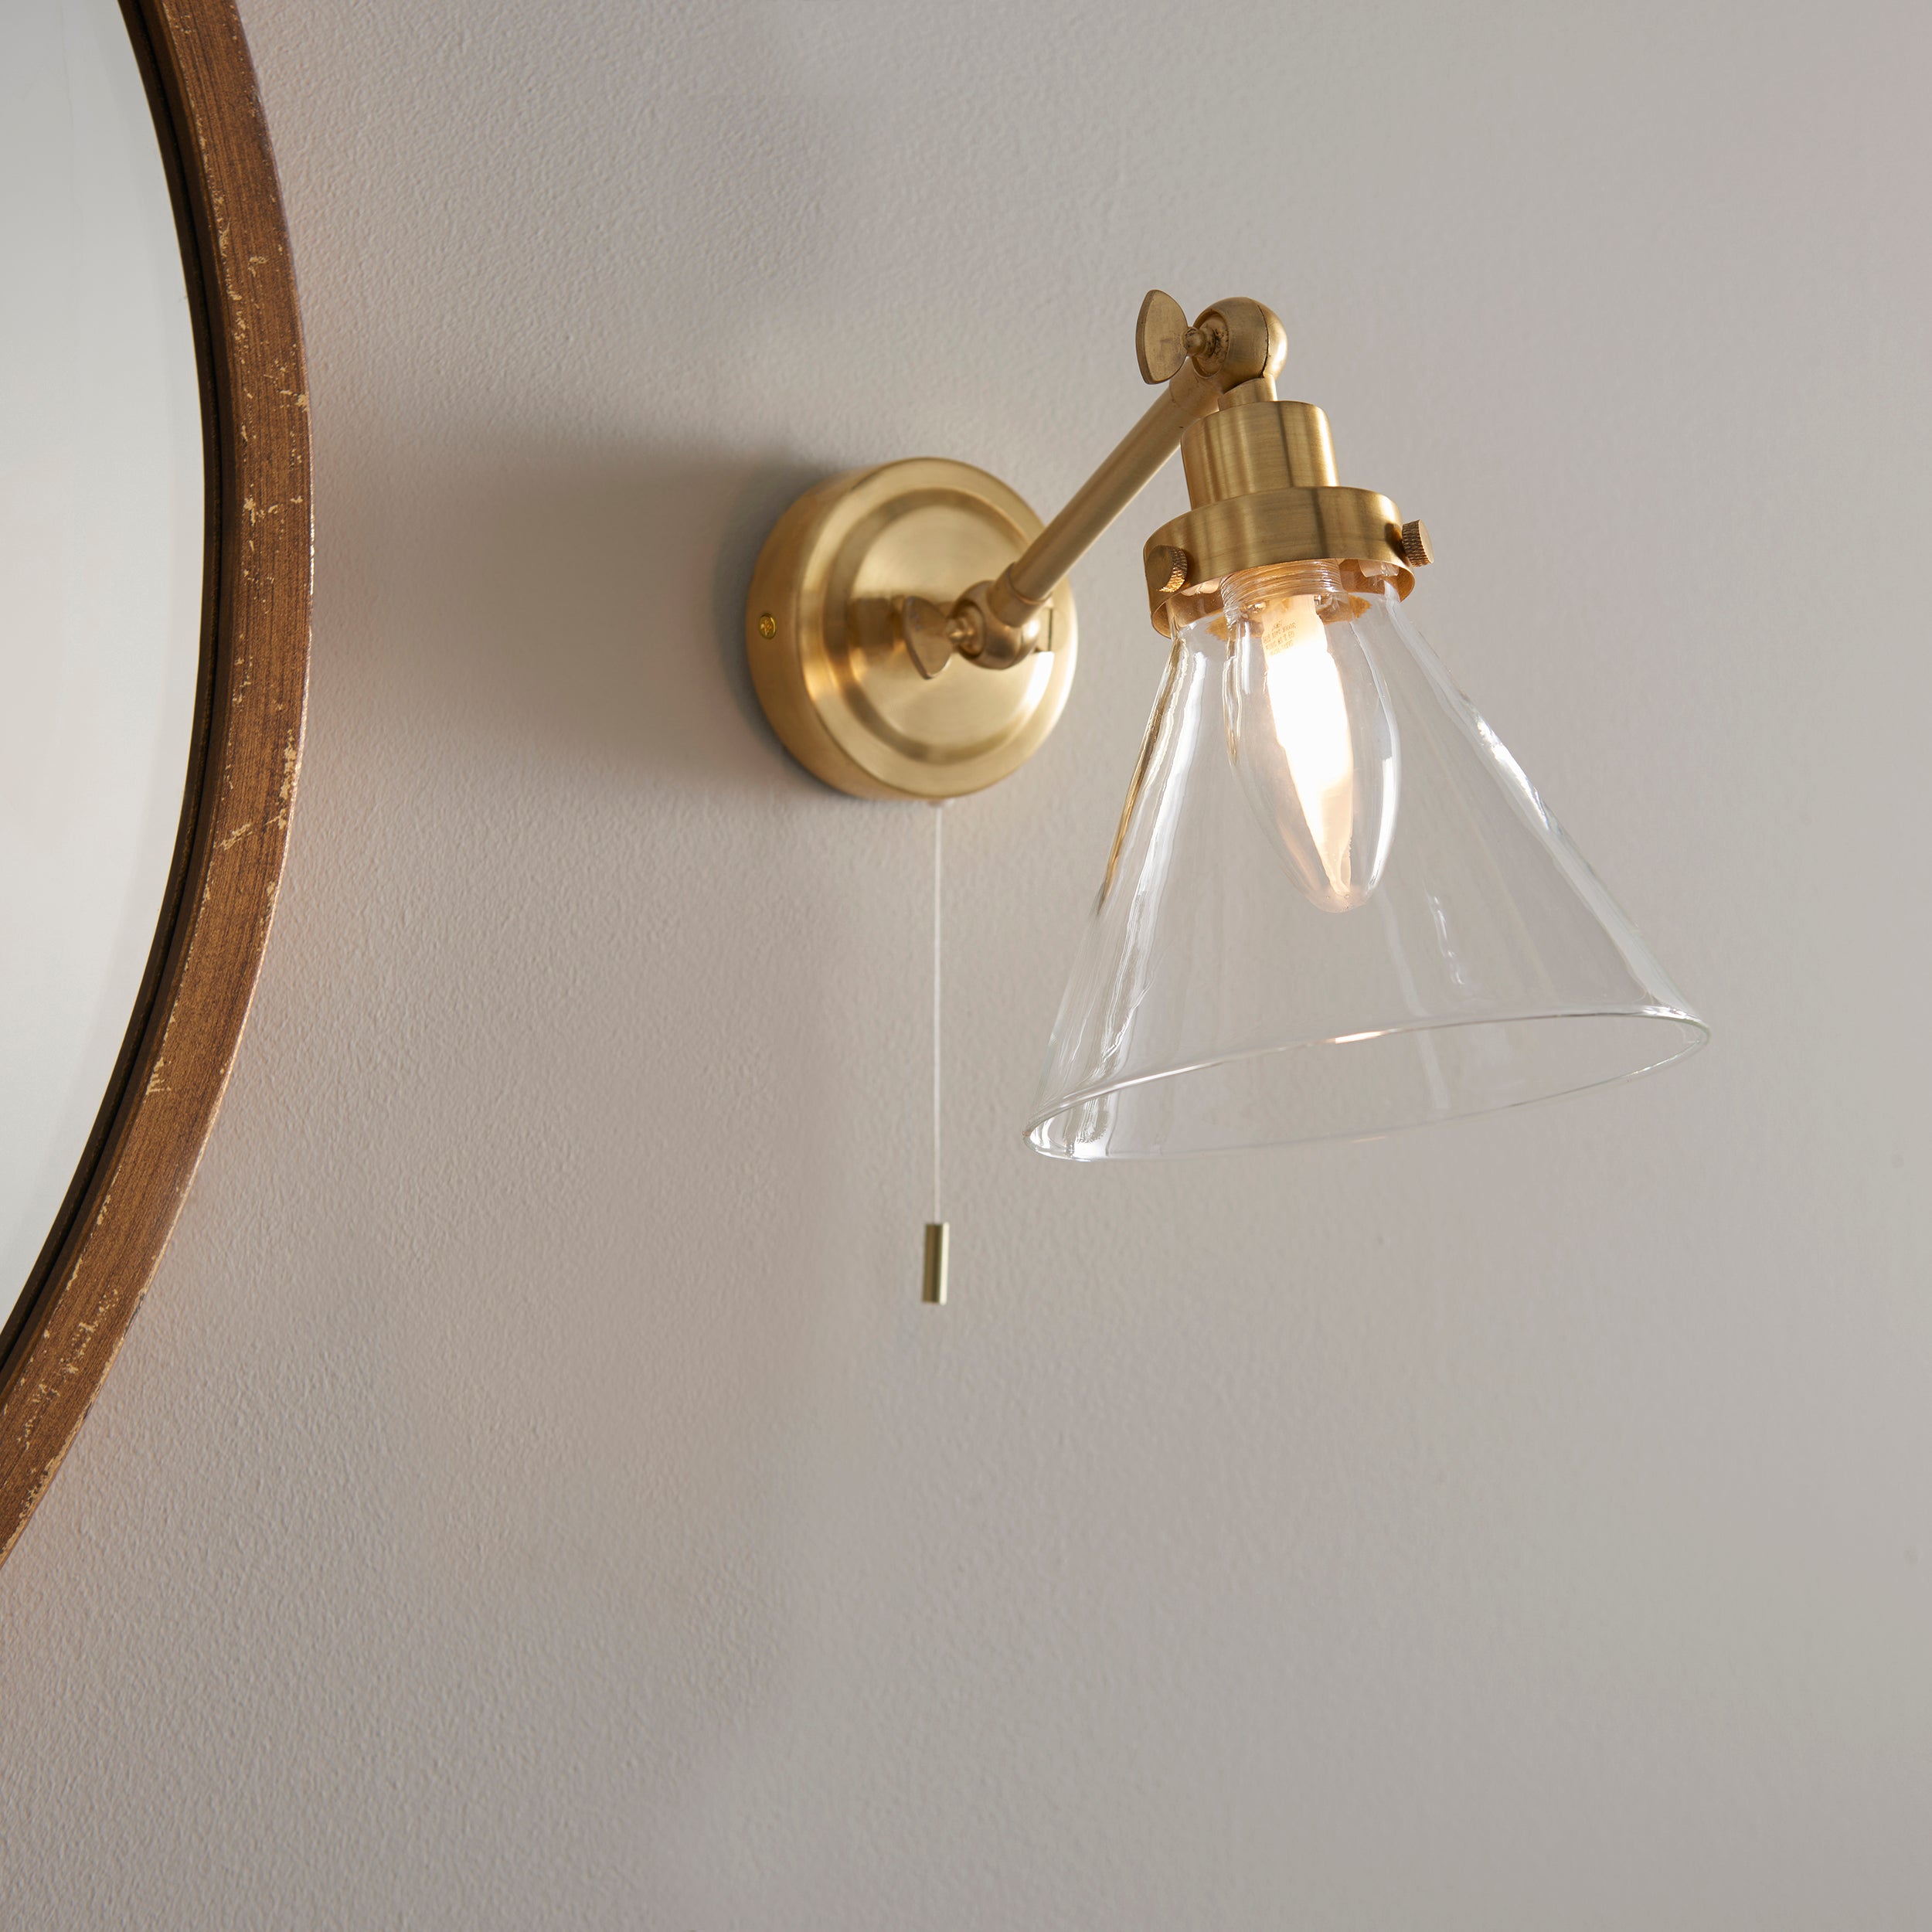 Faraday Contemporary Wall Light. Satin Brass & Clear Glass Shade